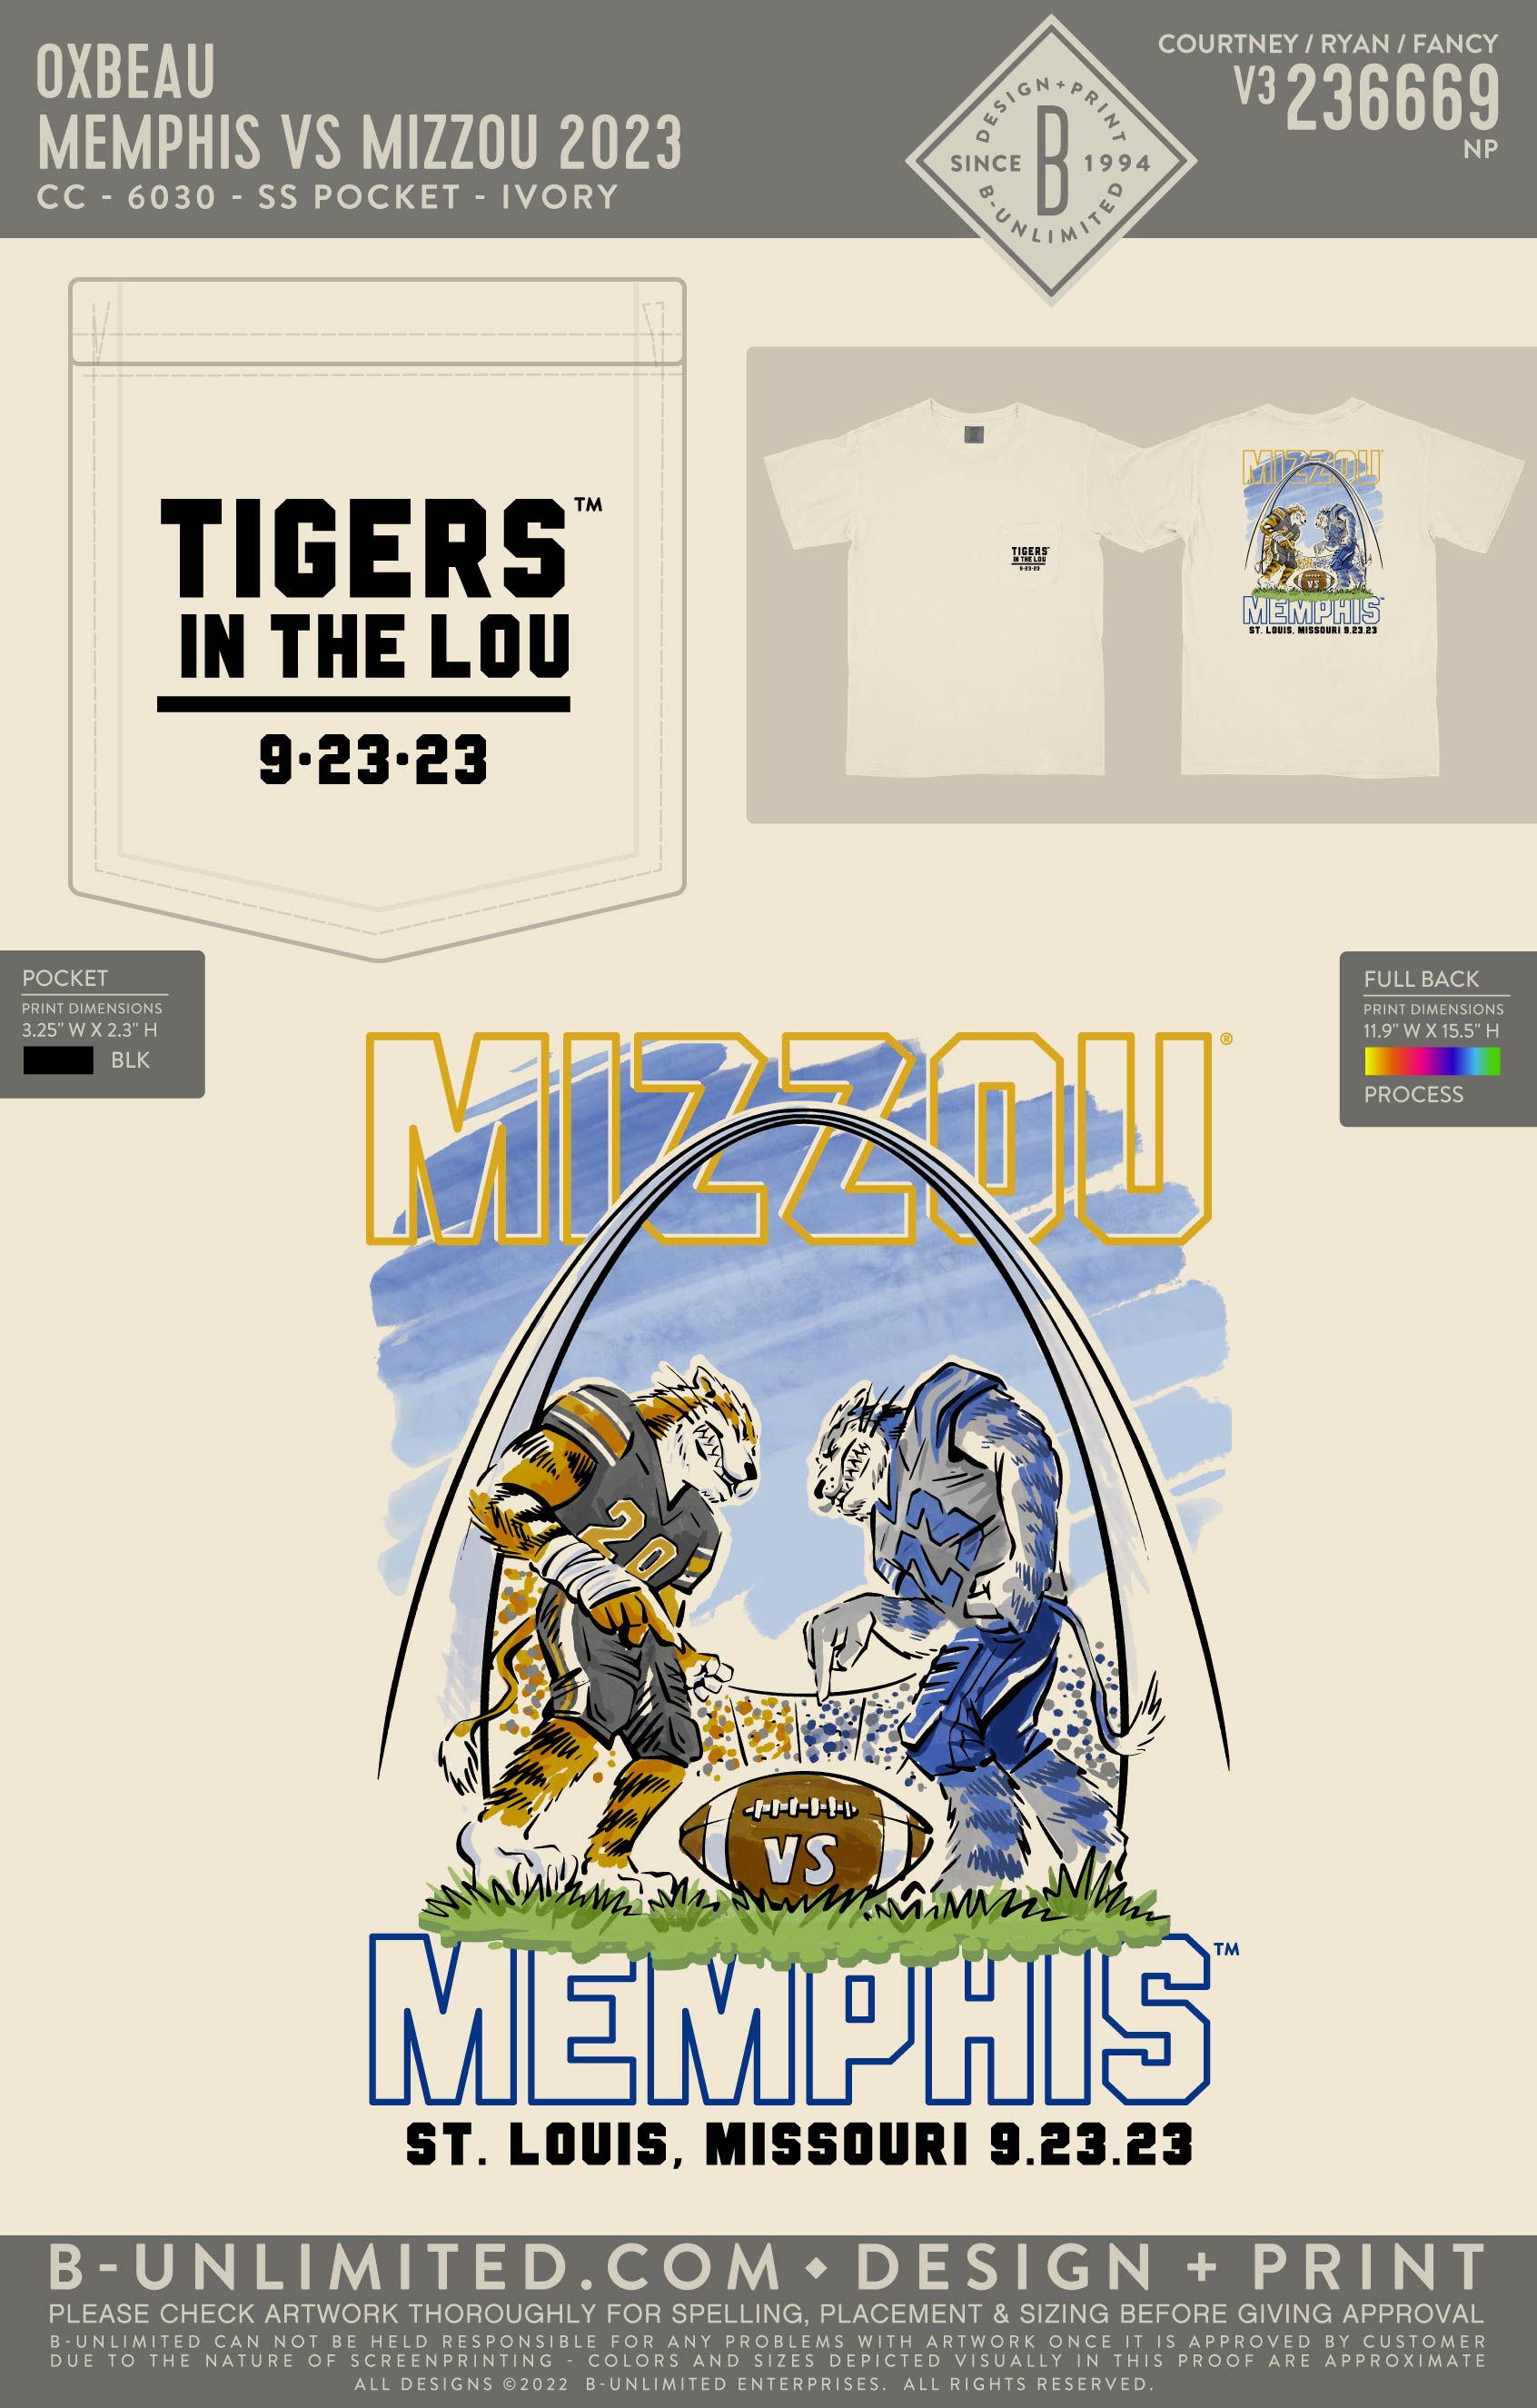 Oxbeau - Memphis vs Mizzou 2023 - CC - 6030 - SS Pocket - Ivory